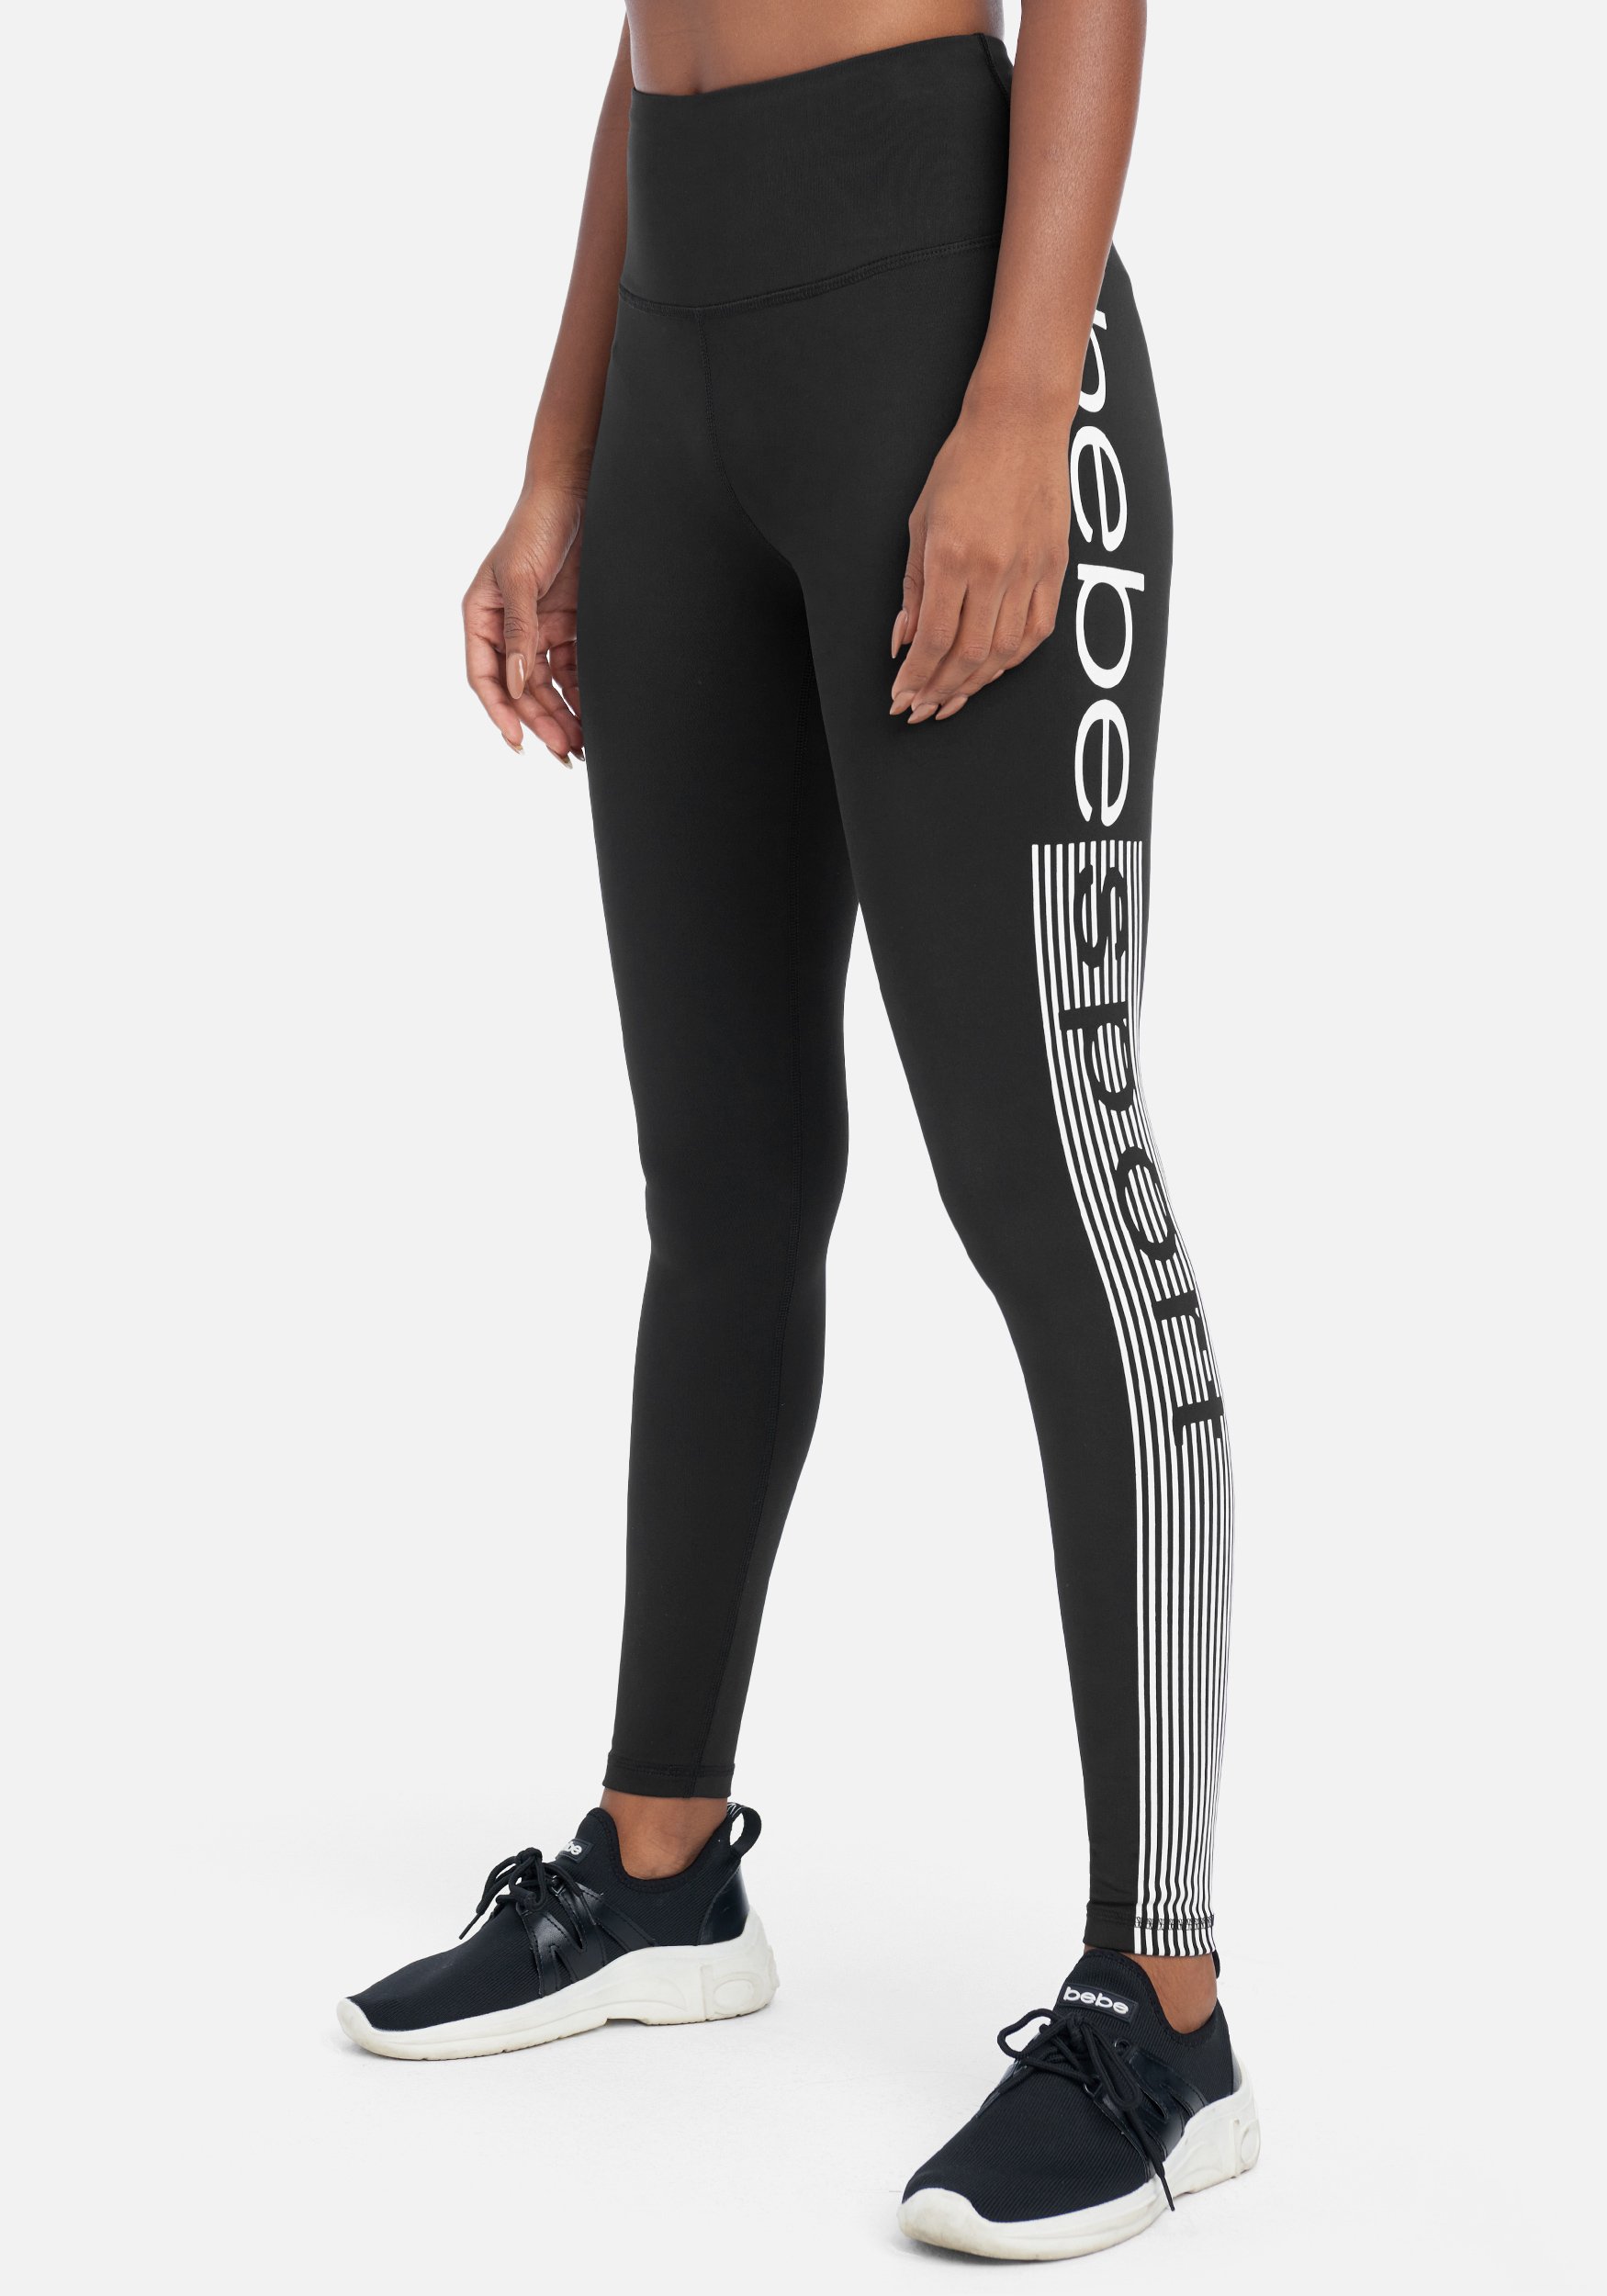 Women's Bebe Sport Logo Legging, Size Small in Black with White Foil Metal/Spandex